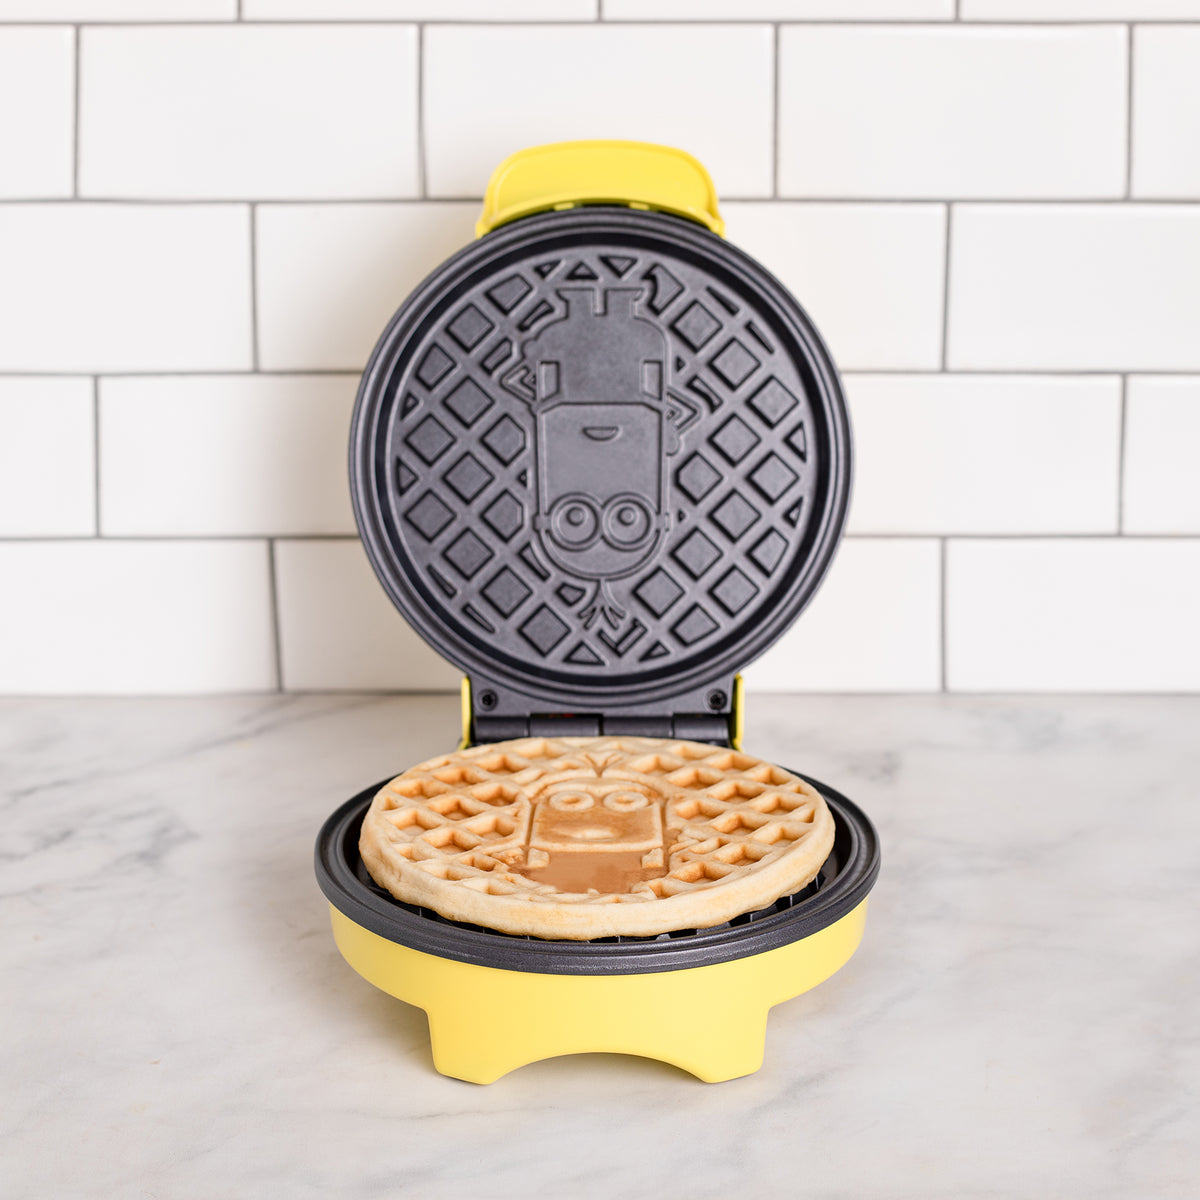 Mini Emojis Waffle Maker - Create 7 Unique Smiley Face Waffles or